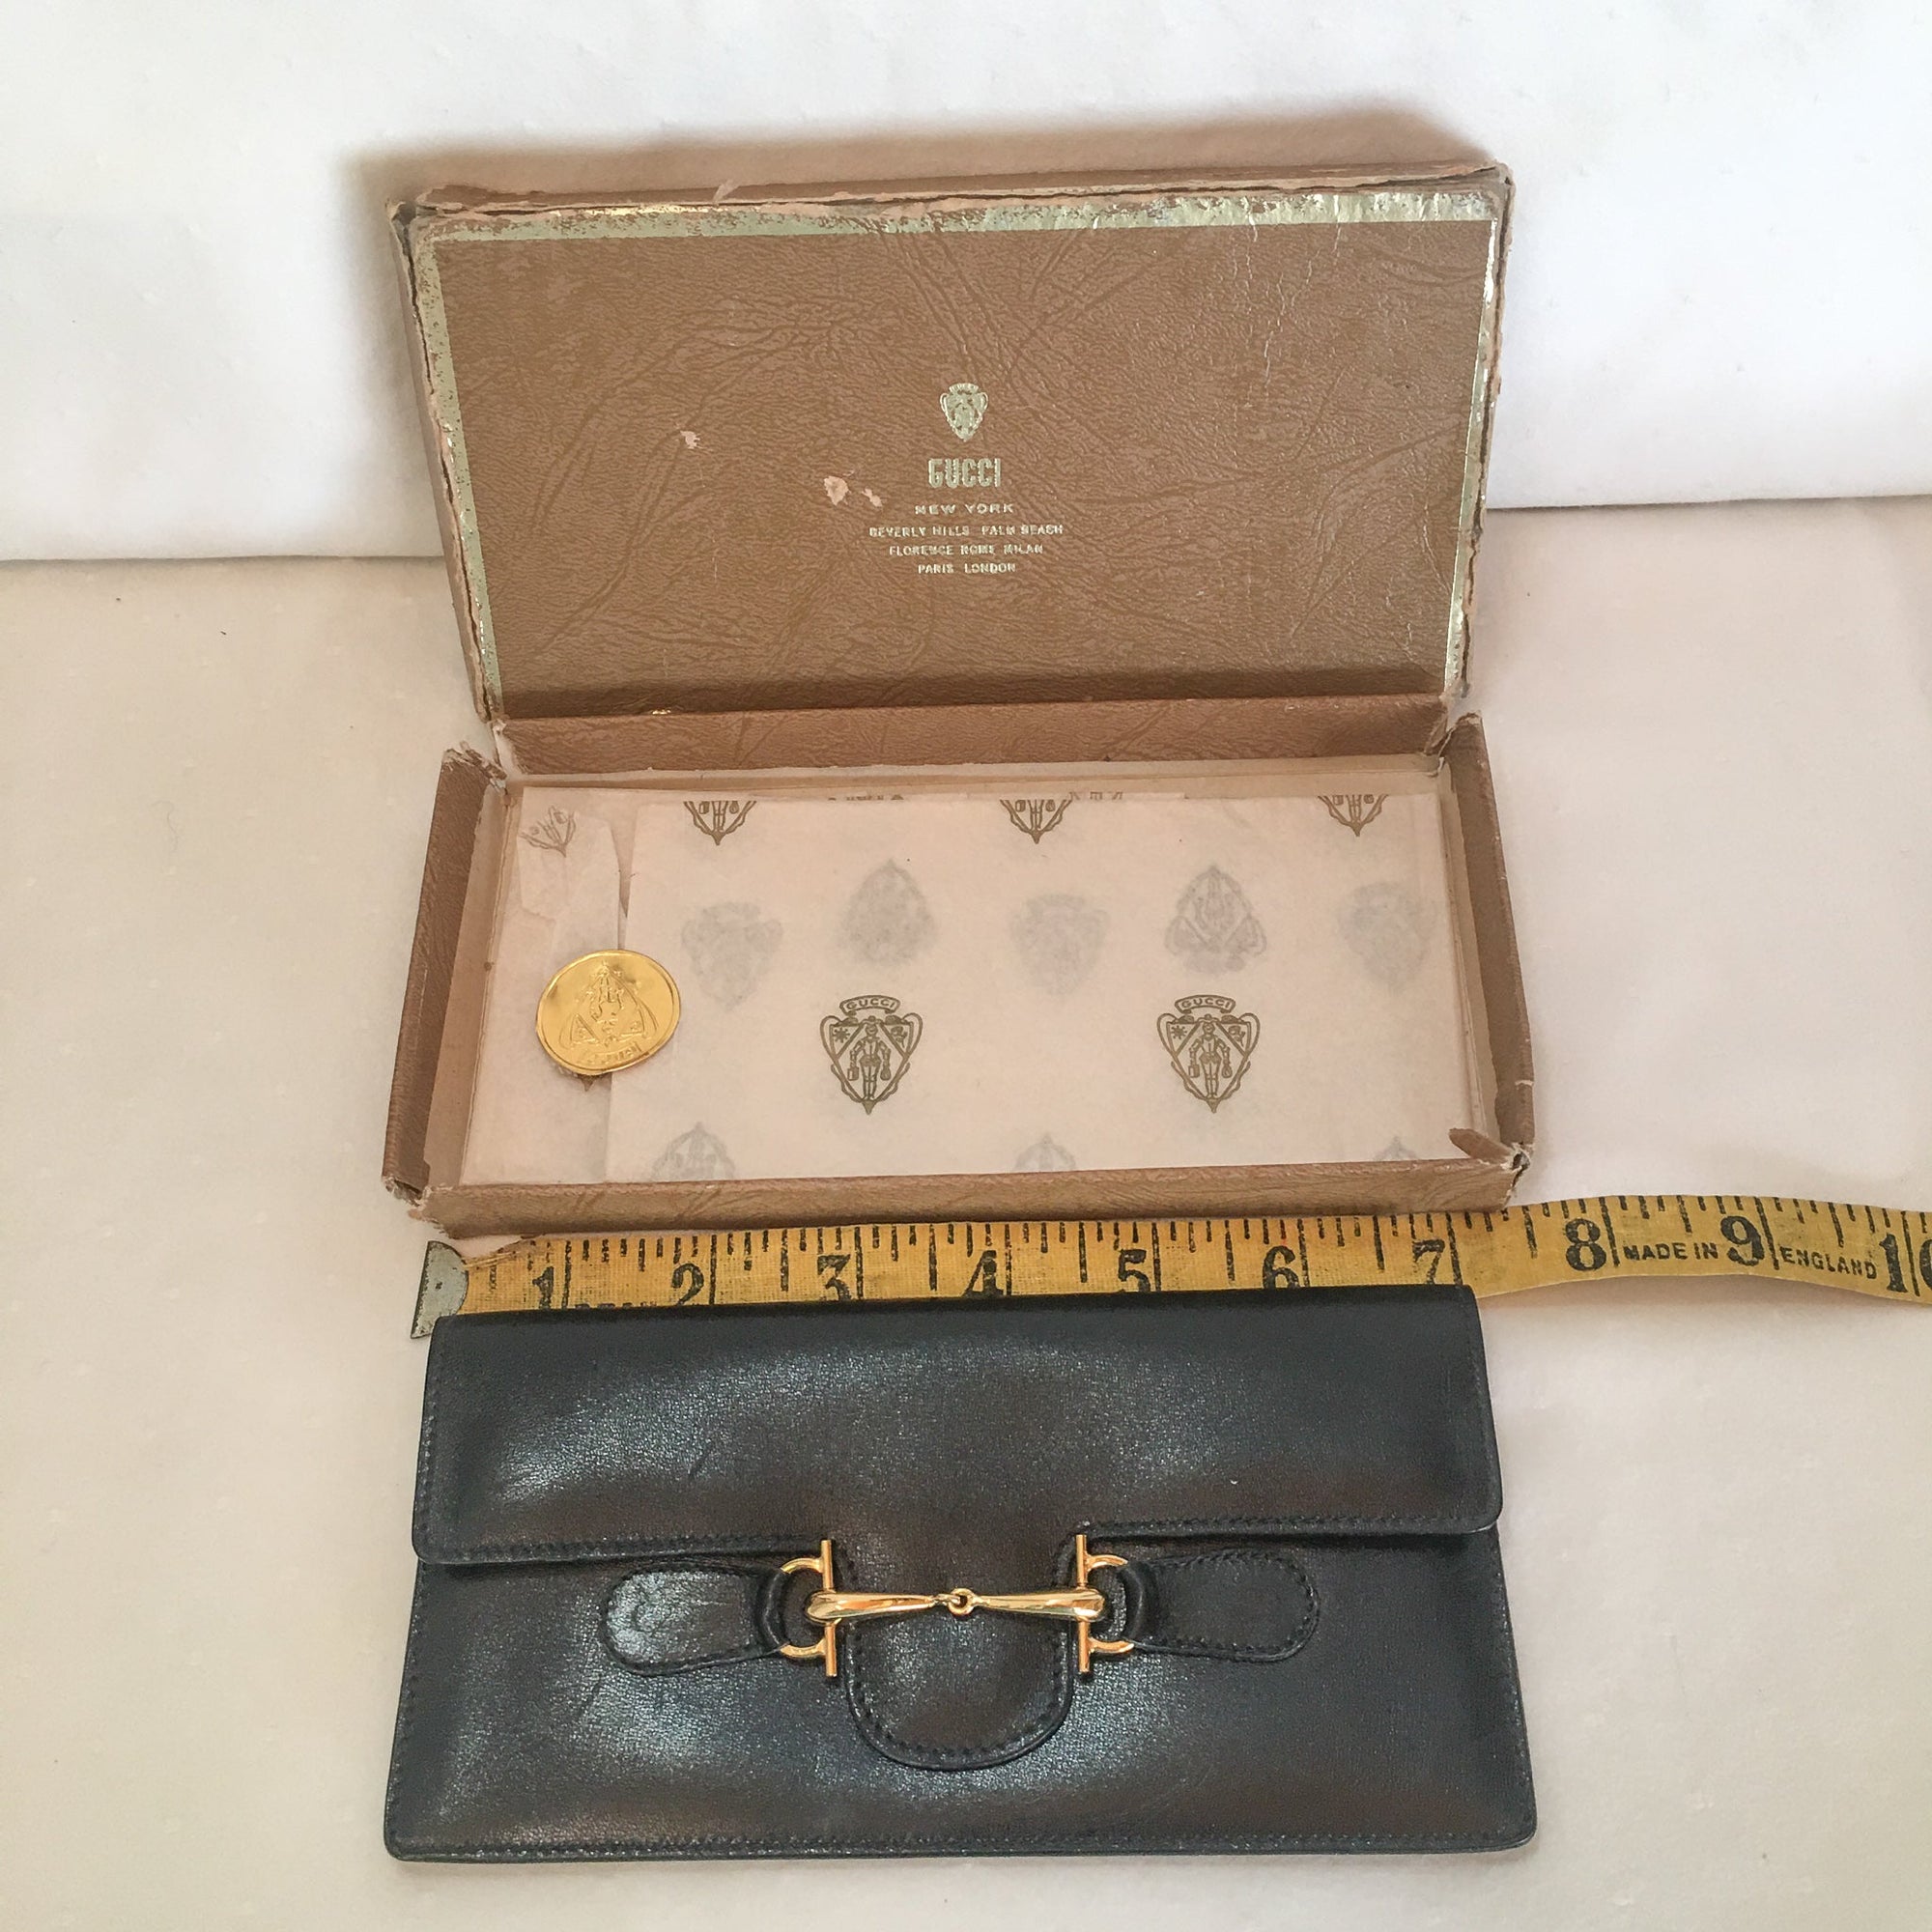 Vintage Black Leather Gucci Wallet / Clutch in Original Box